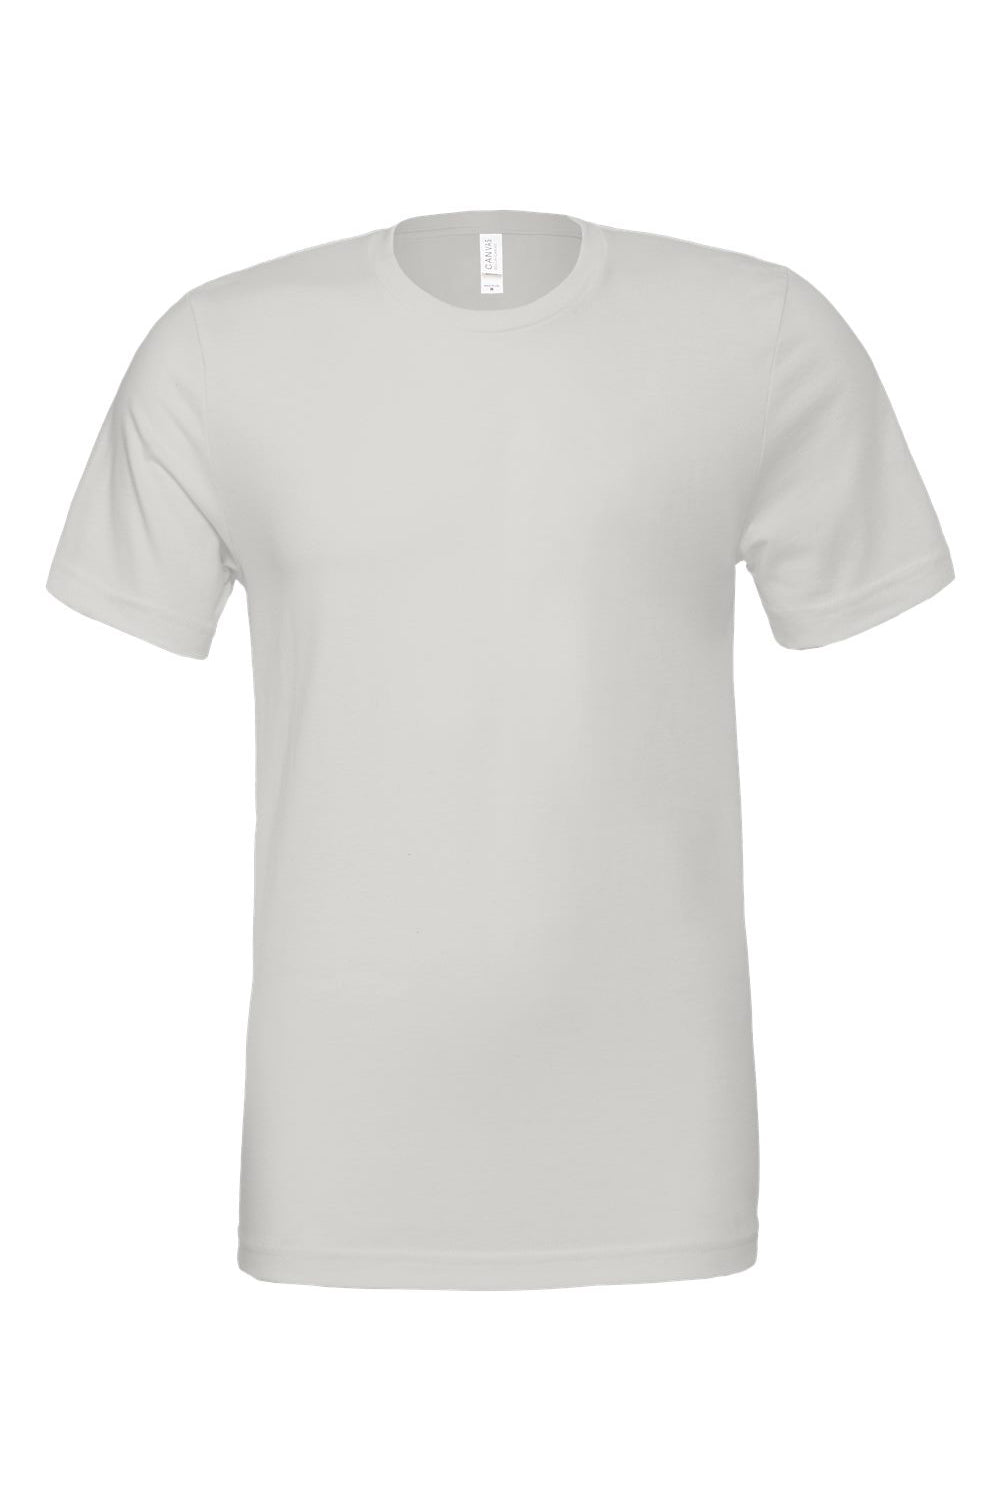 Bella + Canvas BC3001/3001C Mens Jersey Short Sleeve Crewneck T-Shirt Silver Grey Flat Front